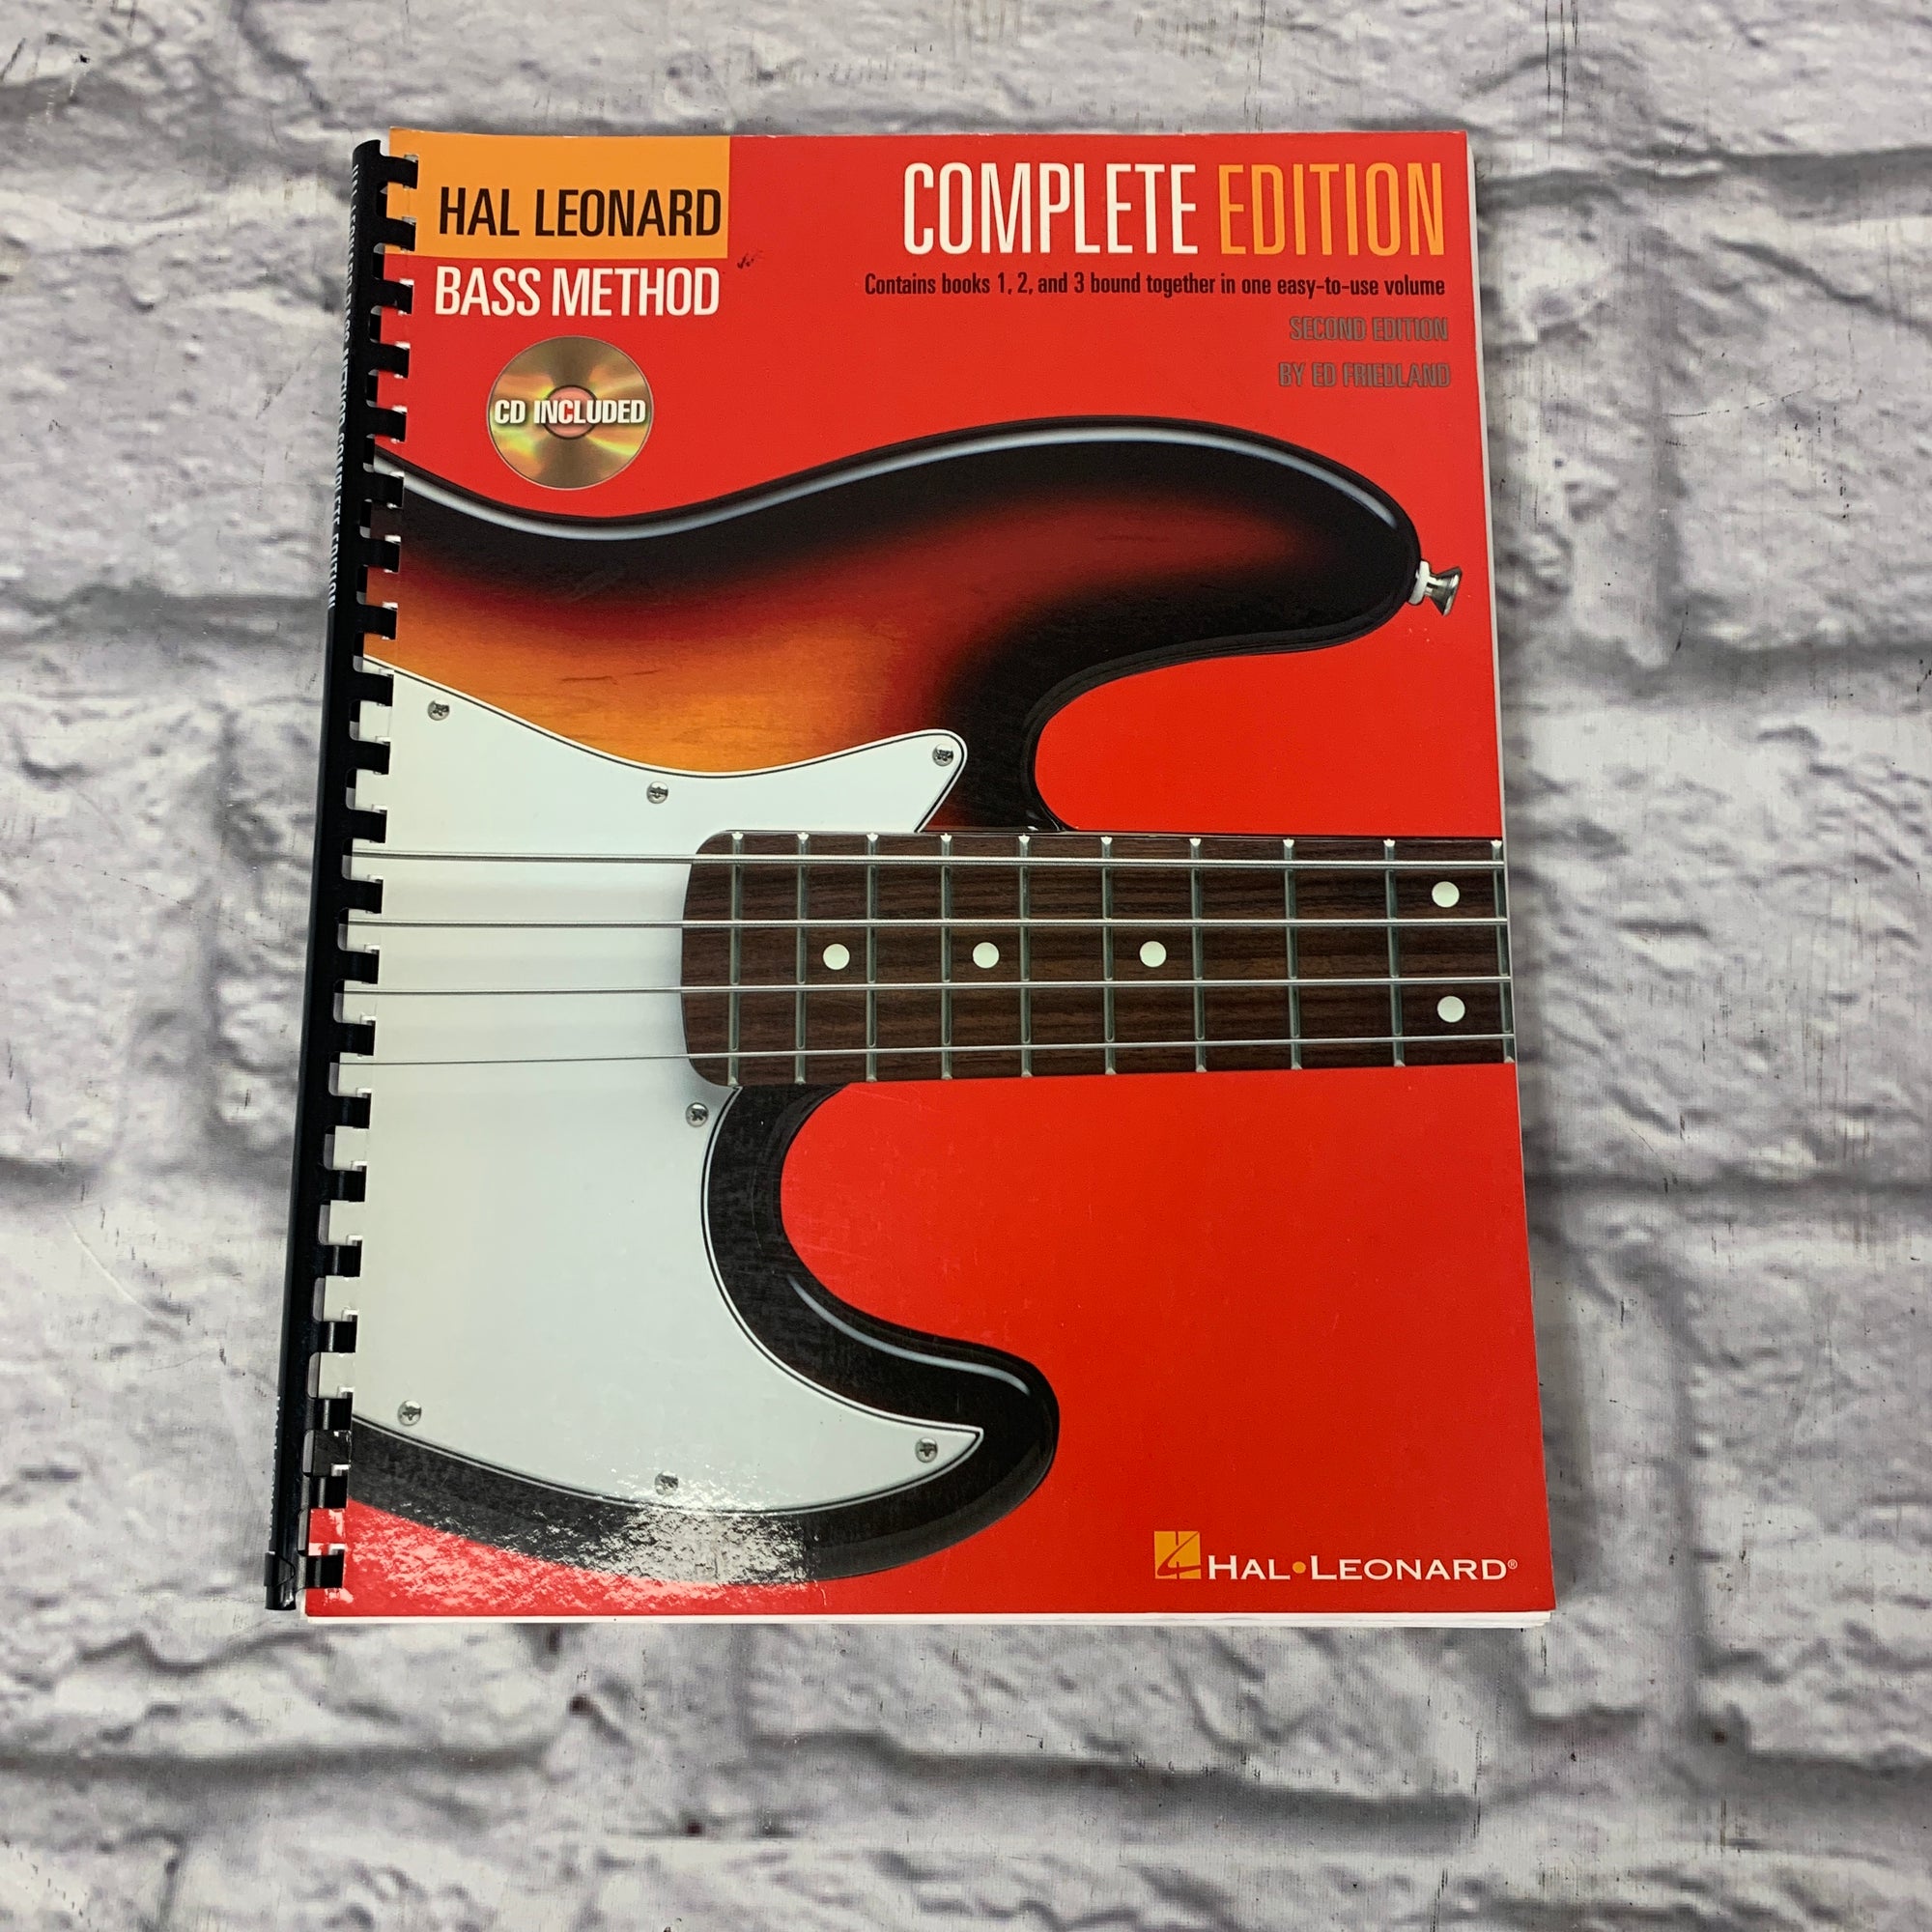 Hal Leonard Bass Method Book - Evolution Music